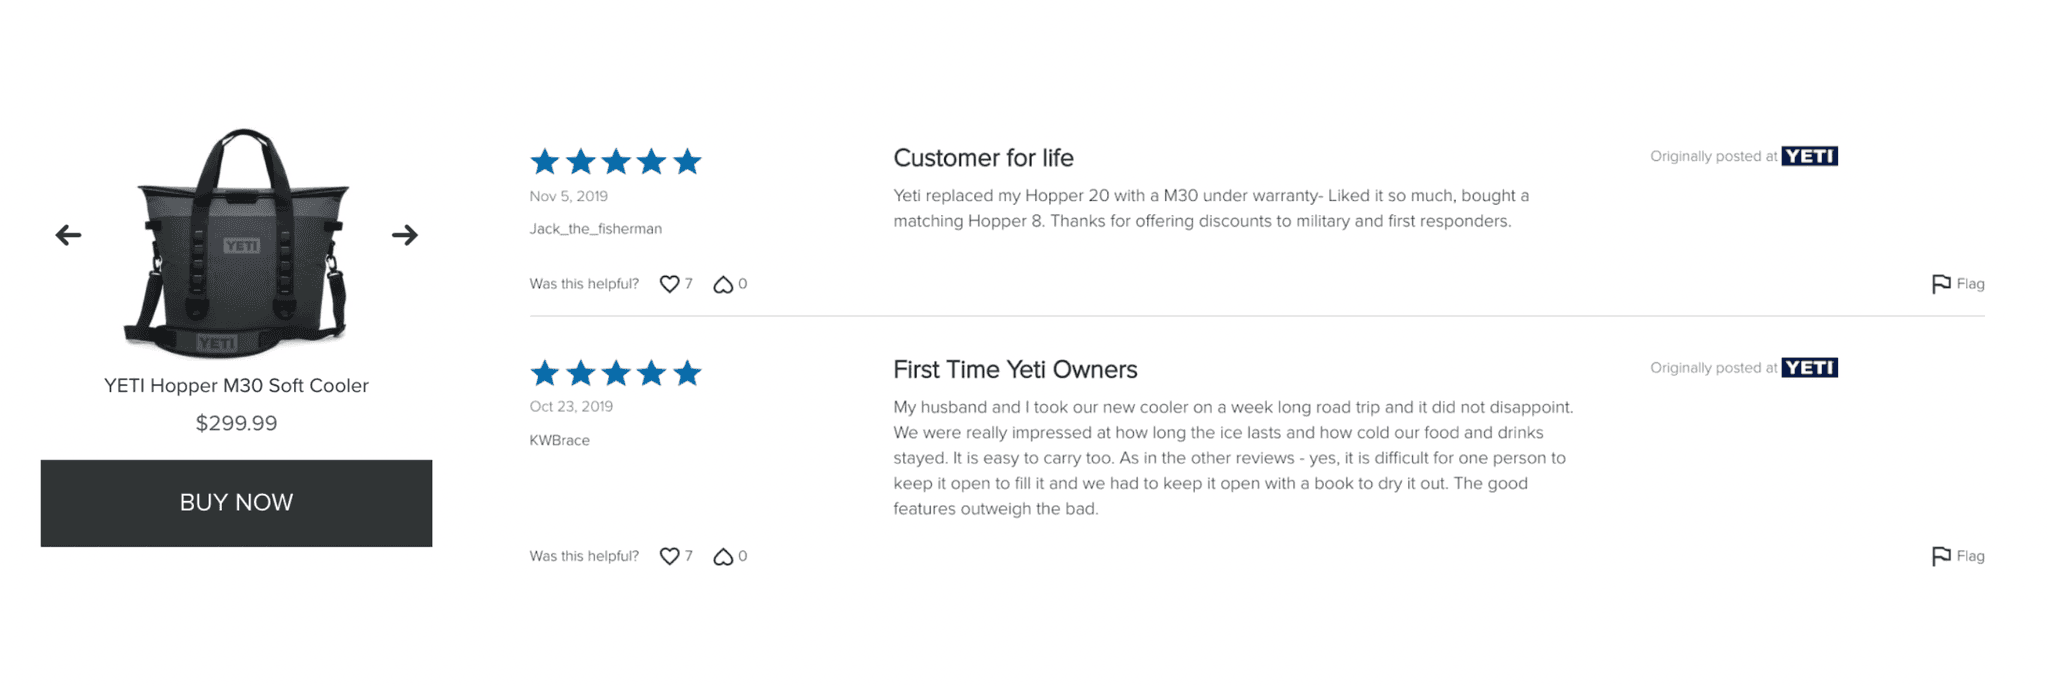 yeti / sun and ski sports customer reviews example